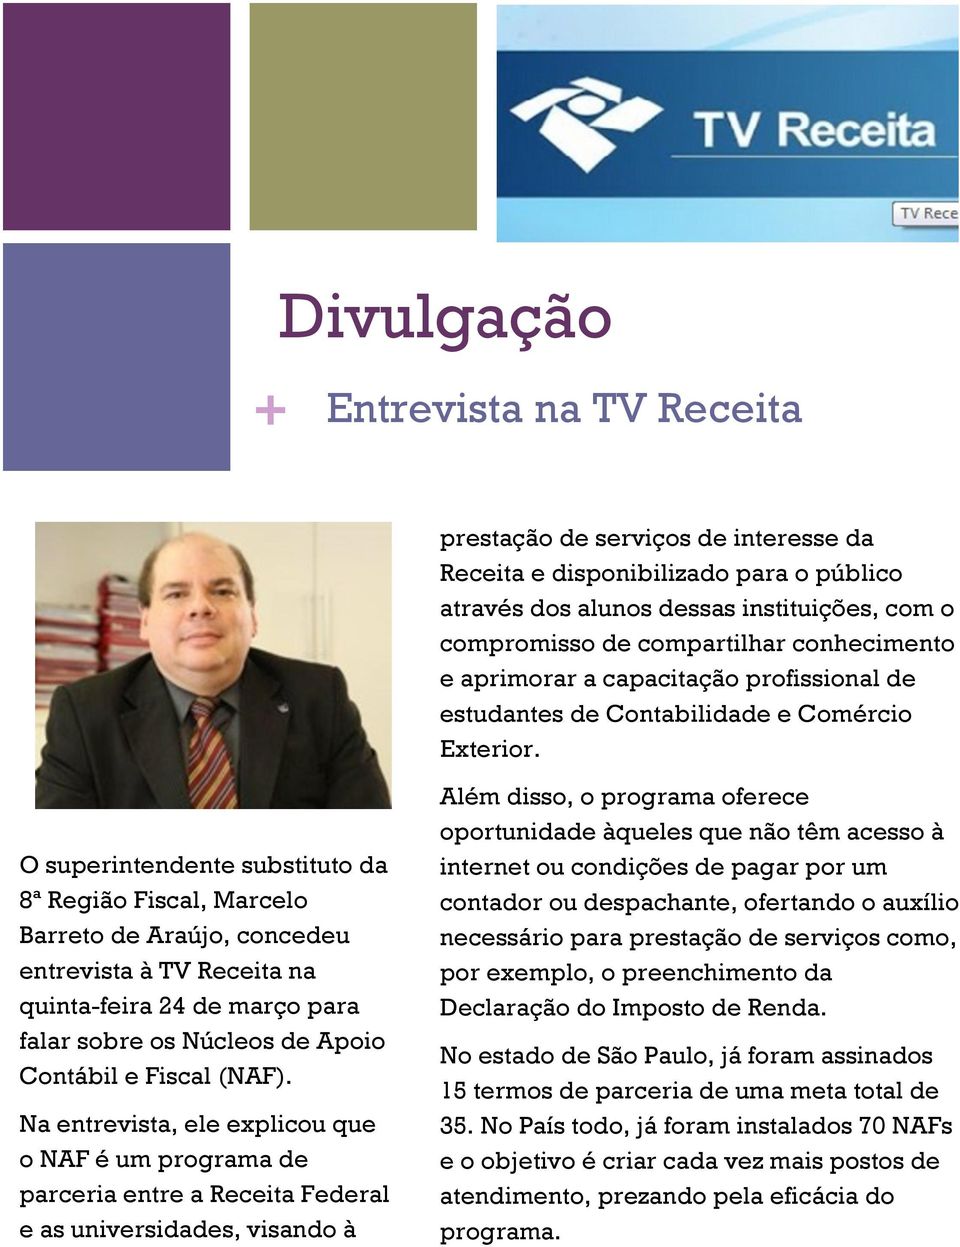 O superintendente substituto da 8ª Região Fiscal, Marcelo Barreto de Araújo, concedeu entrevista à TV Receita na quinta-feira 24 de março para falar sobre os Núcleos de Apoio Contábil e Fiscal (NAF).